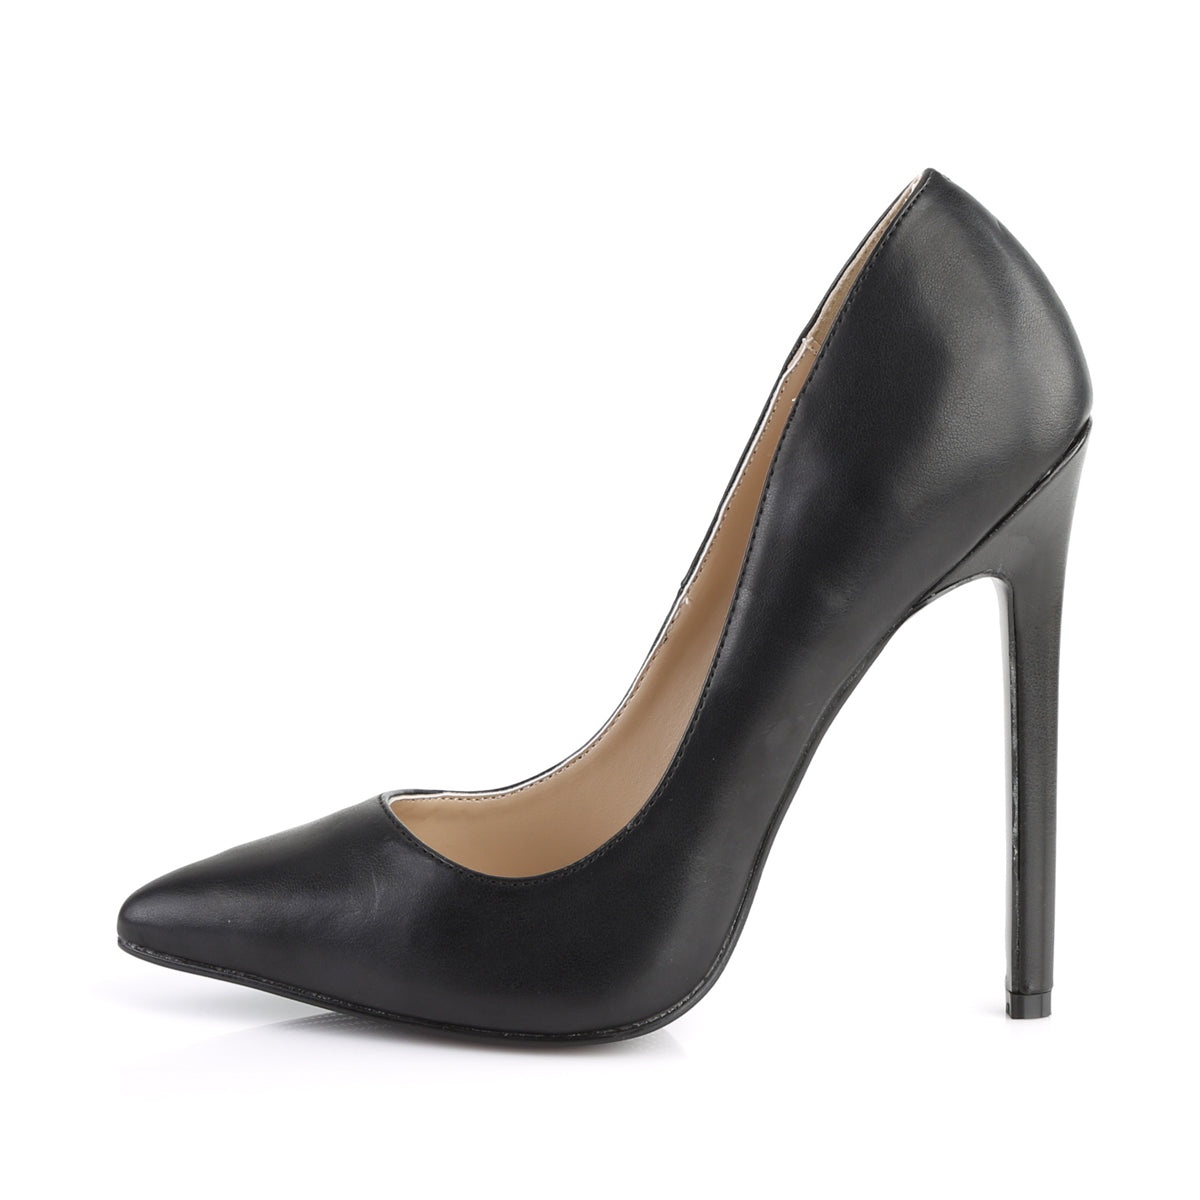 SEXY-20 Pleaser Shoes 5 Inch Heel Black Fetish Footwear-Pleaser- Sexy Shoes Pole Dance Heels